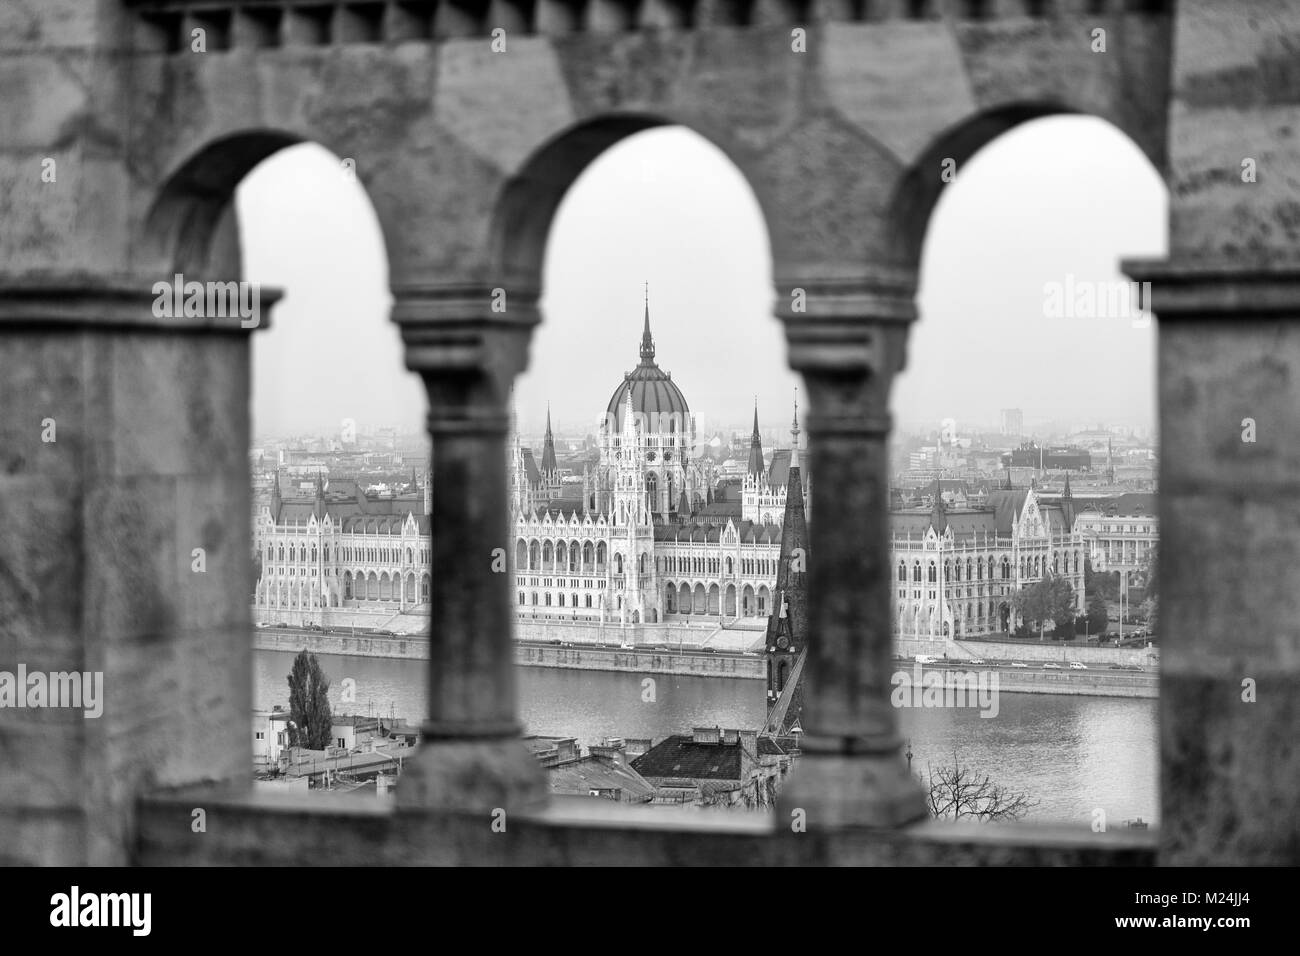 Országház (Hungarian Parliament Building) in Budapest, Hungary framed here by Budavári Palota (Buda Castle). Photographed in black and white. Stock Photo